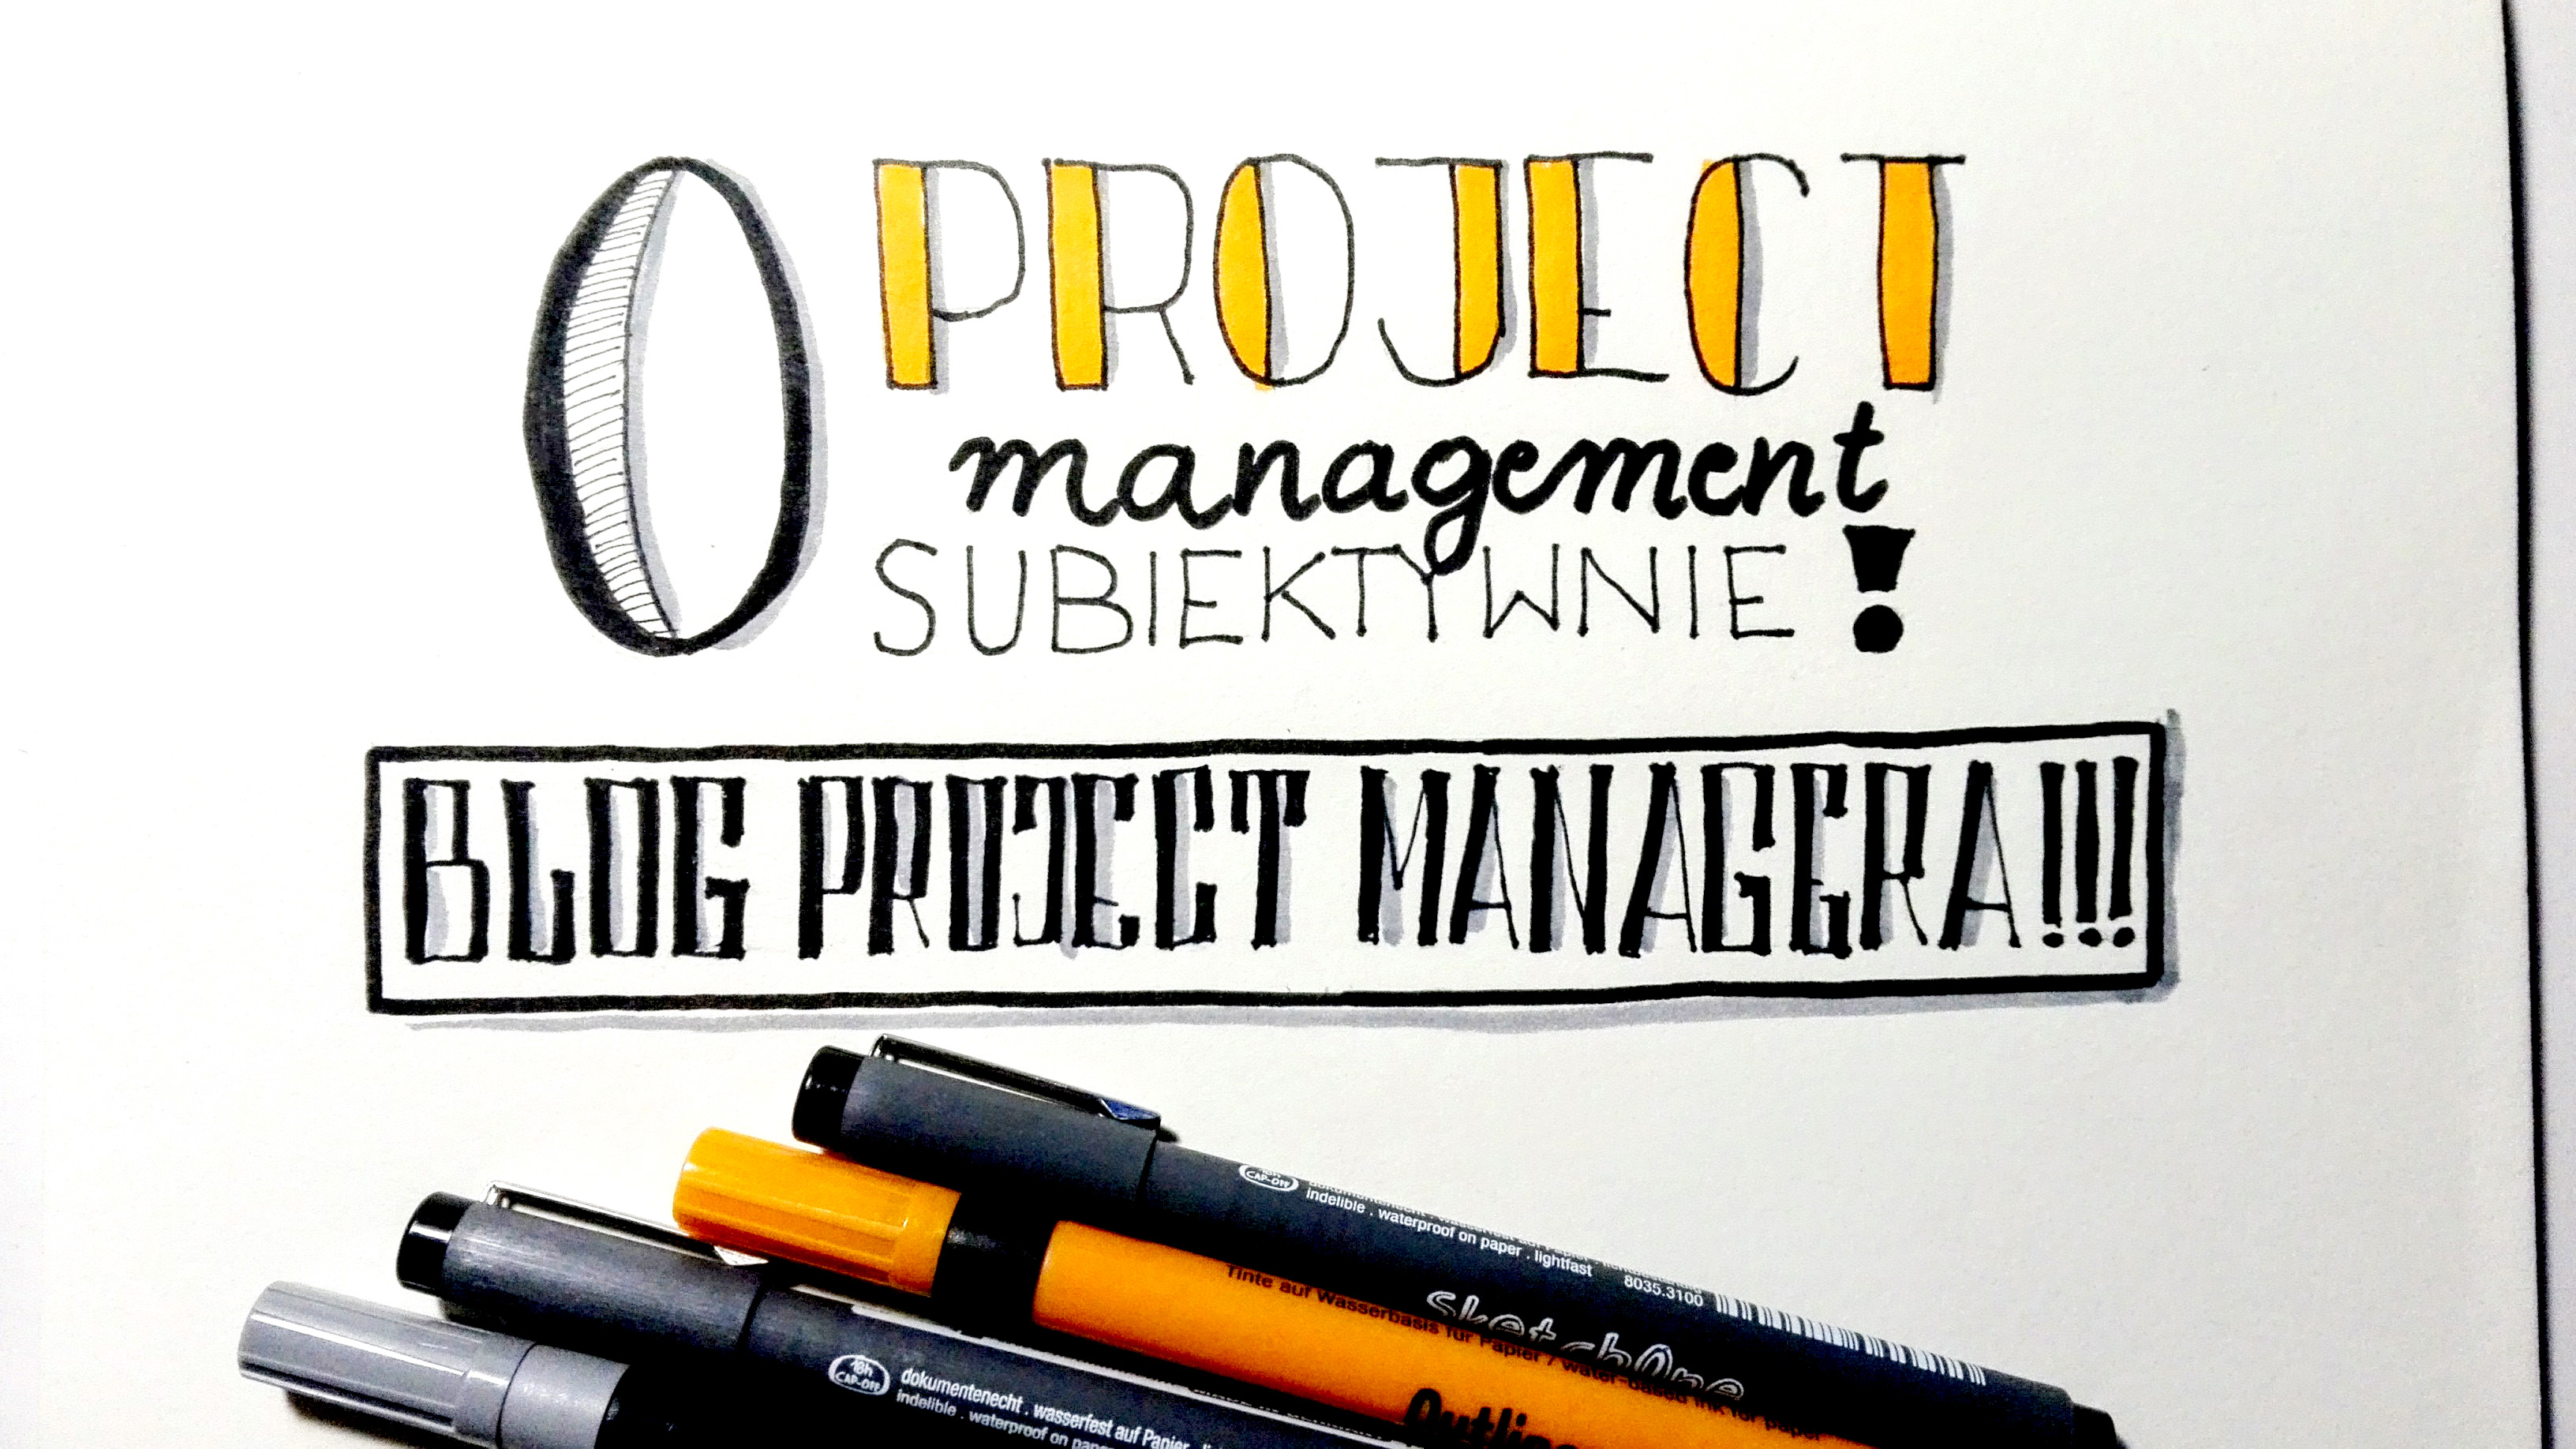 Project Management - sketchnoting